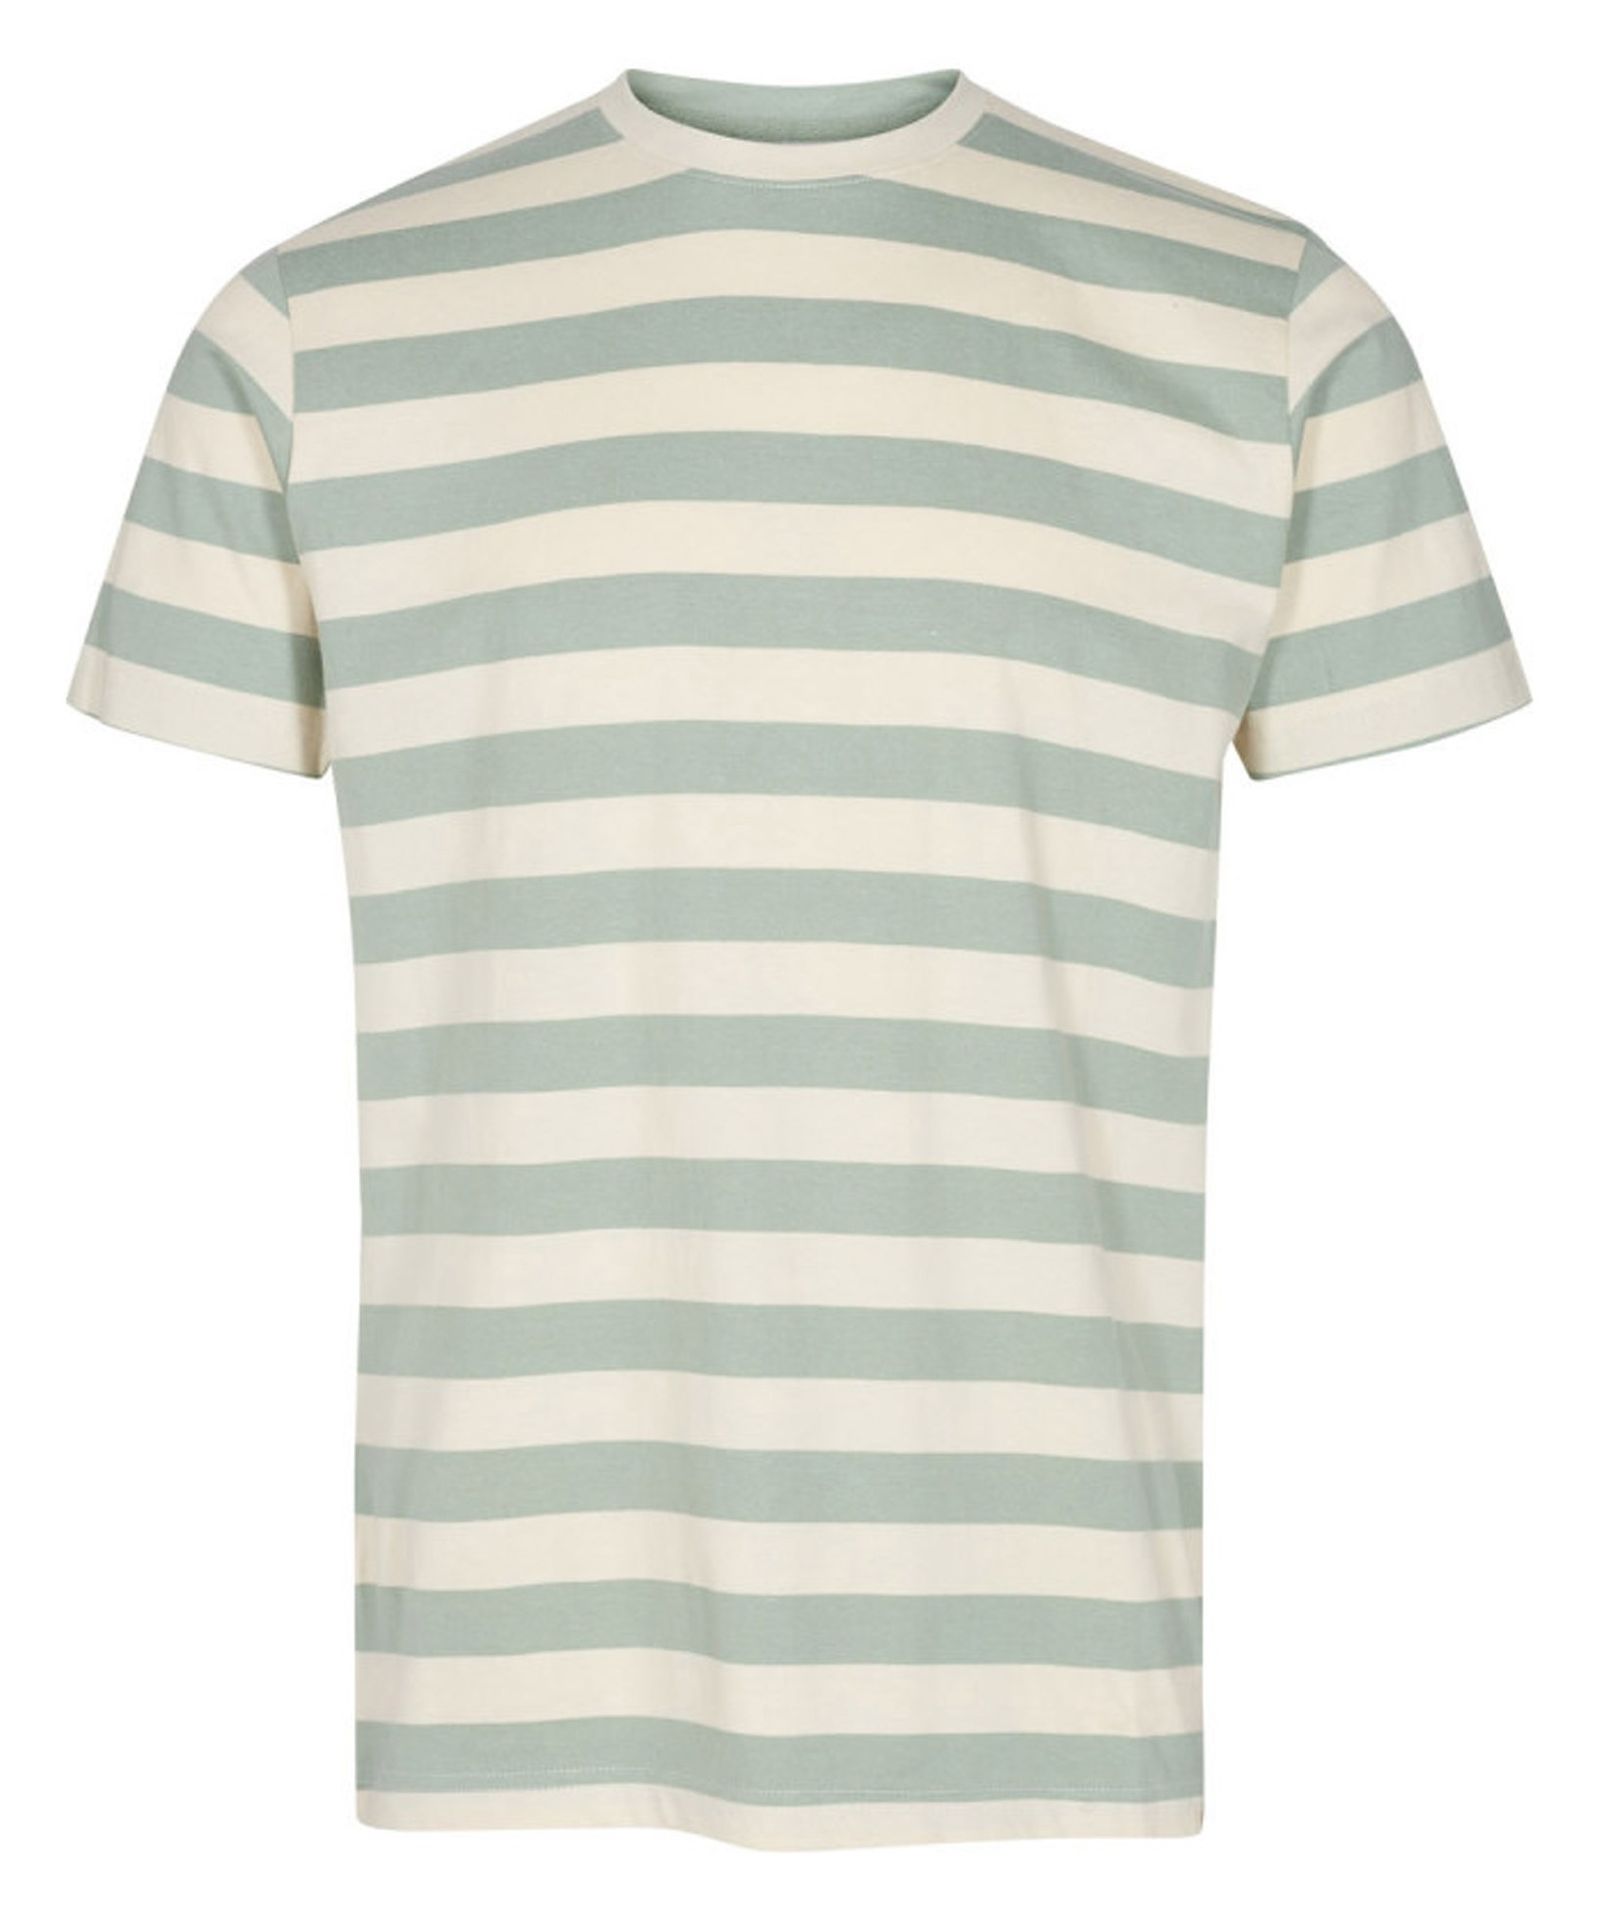 تی شرت نخی مردانه Thiago - مینیموم - سبز روشن - 2